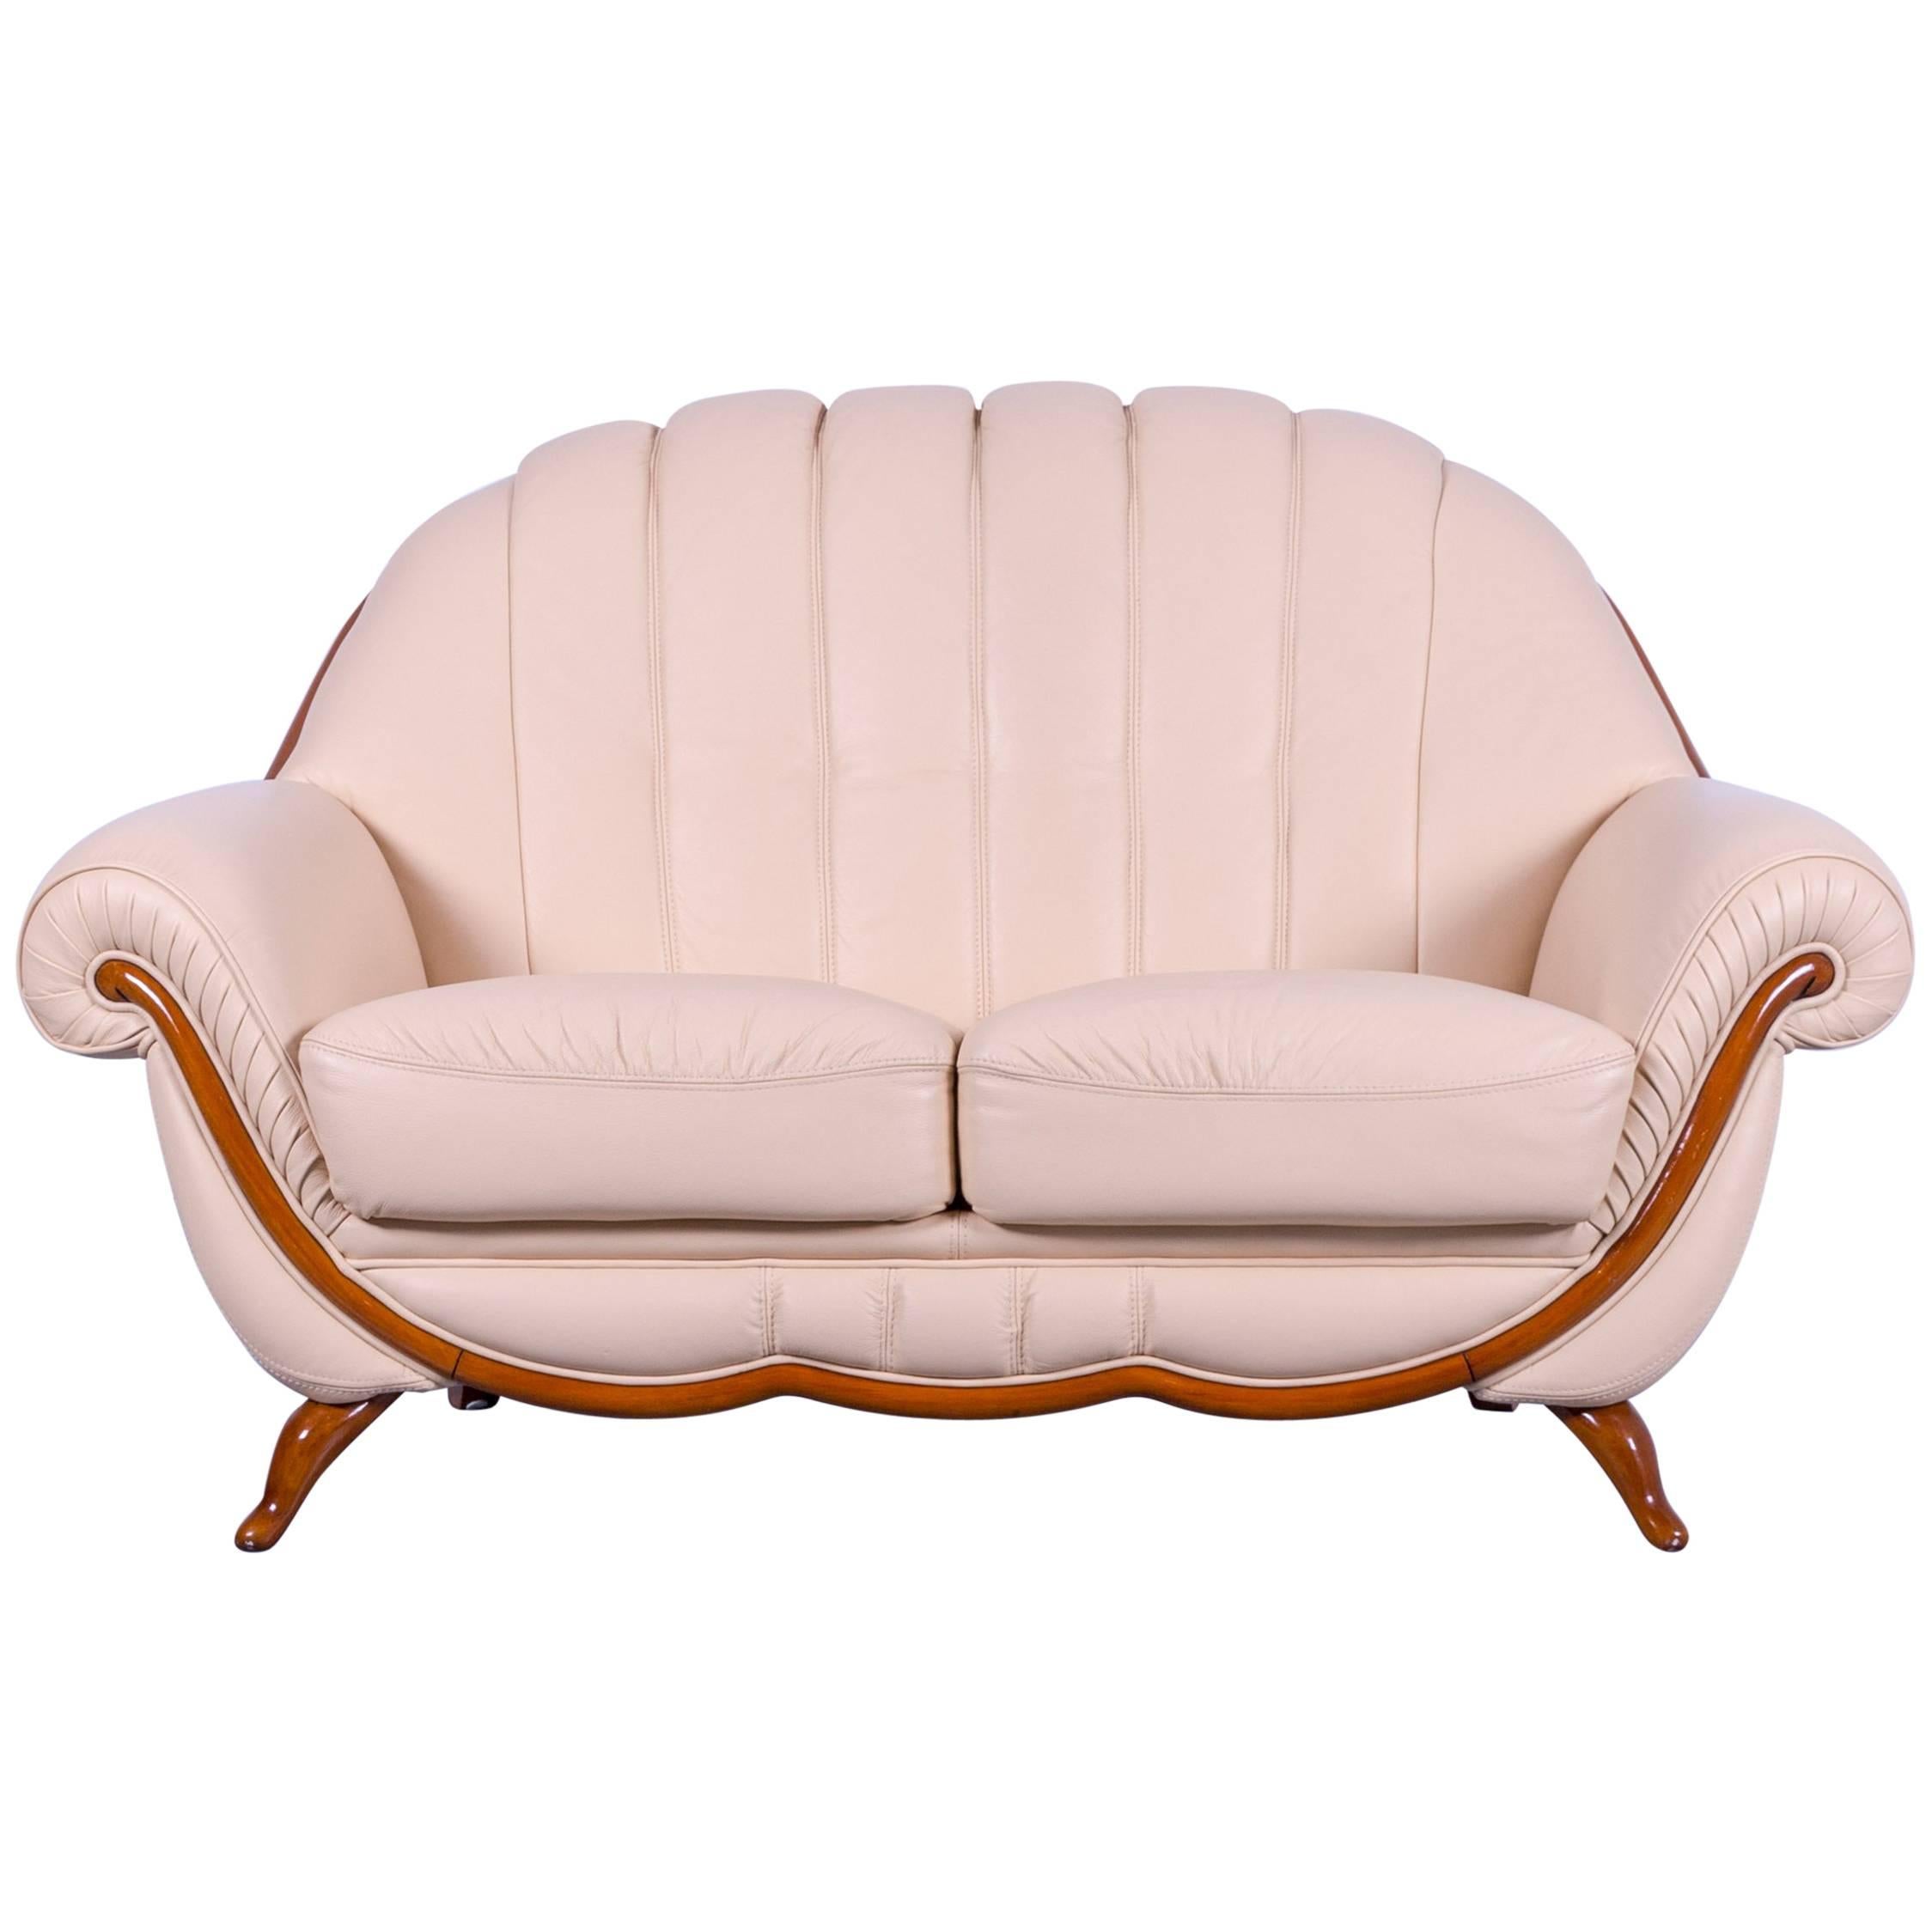 Nieri Designer Sofa Crème Beige Leather Two-Seat Couch Wood